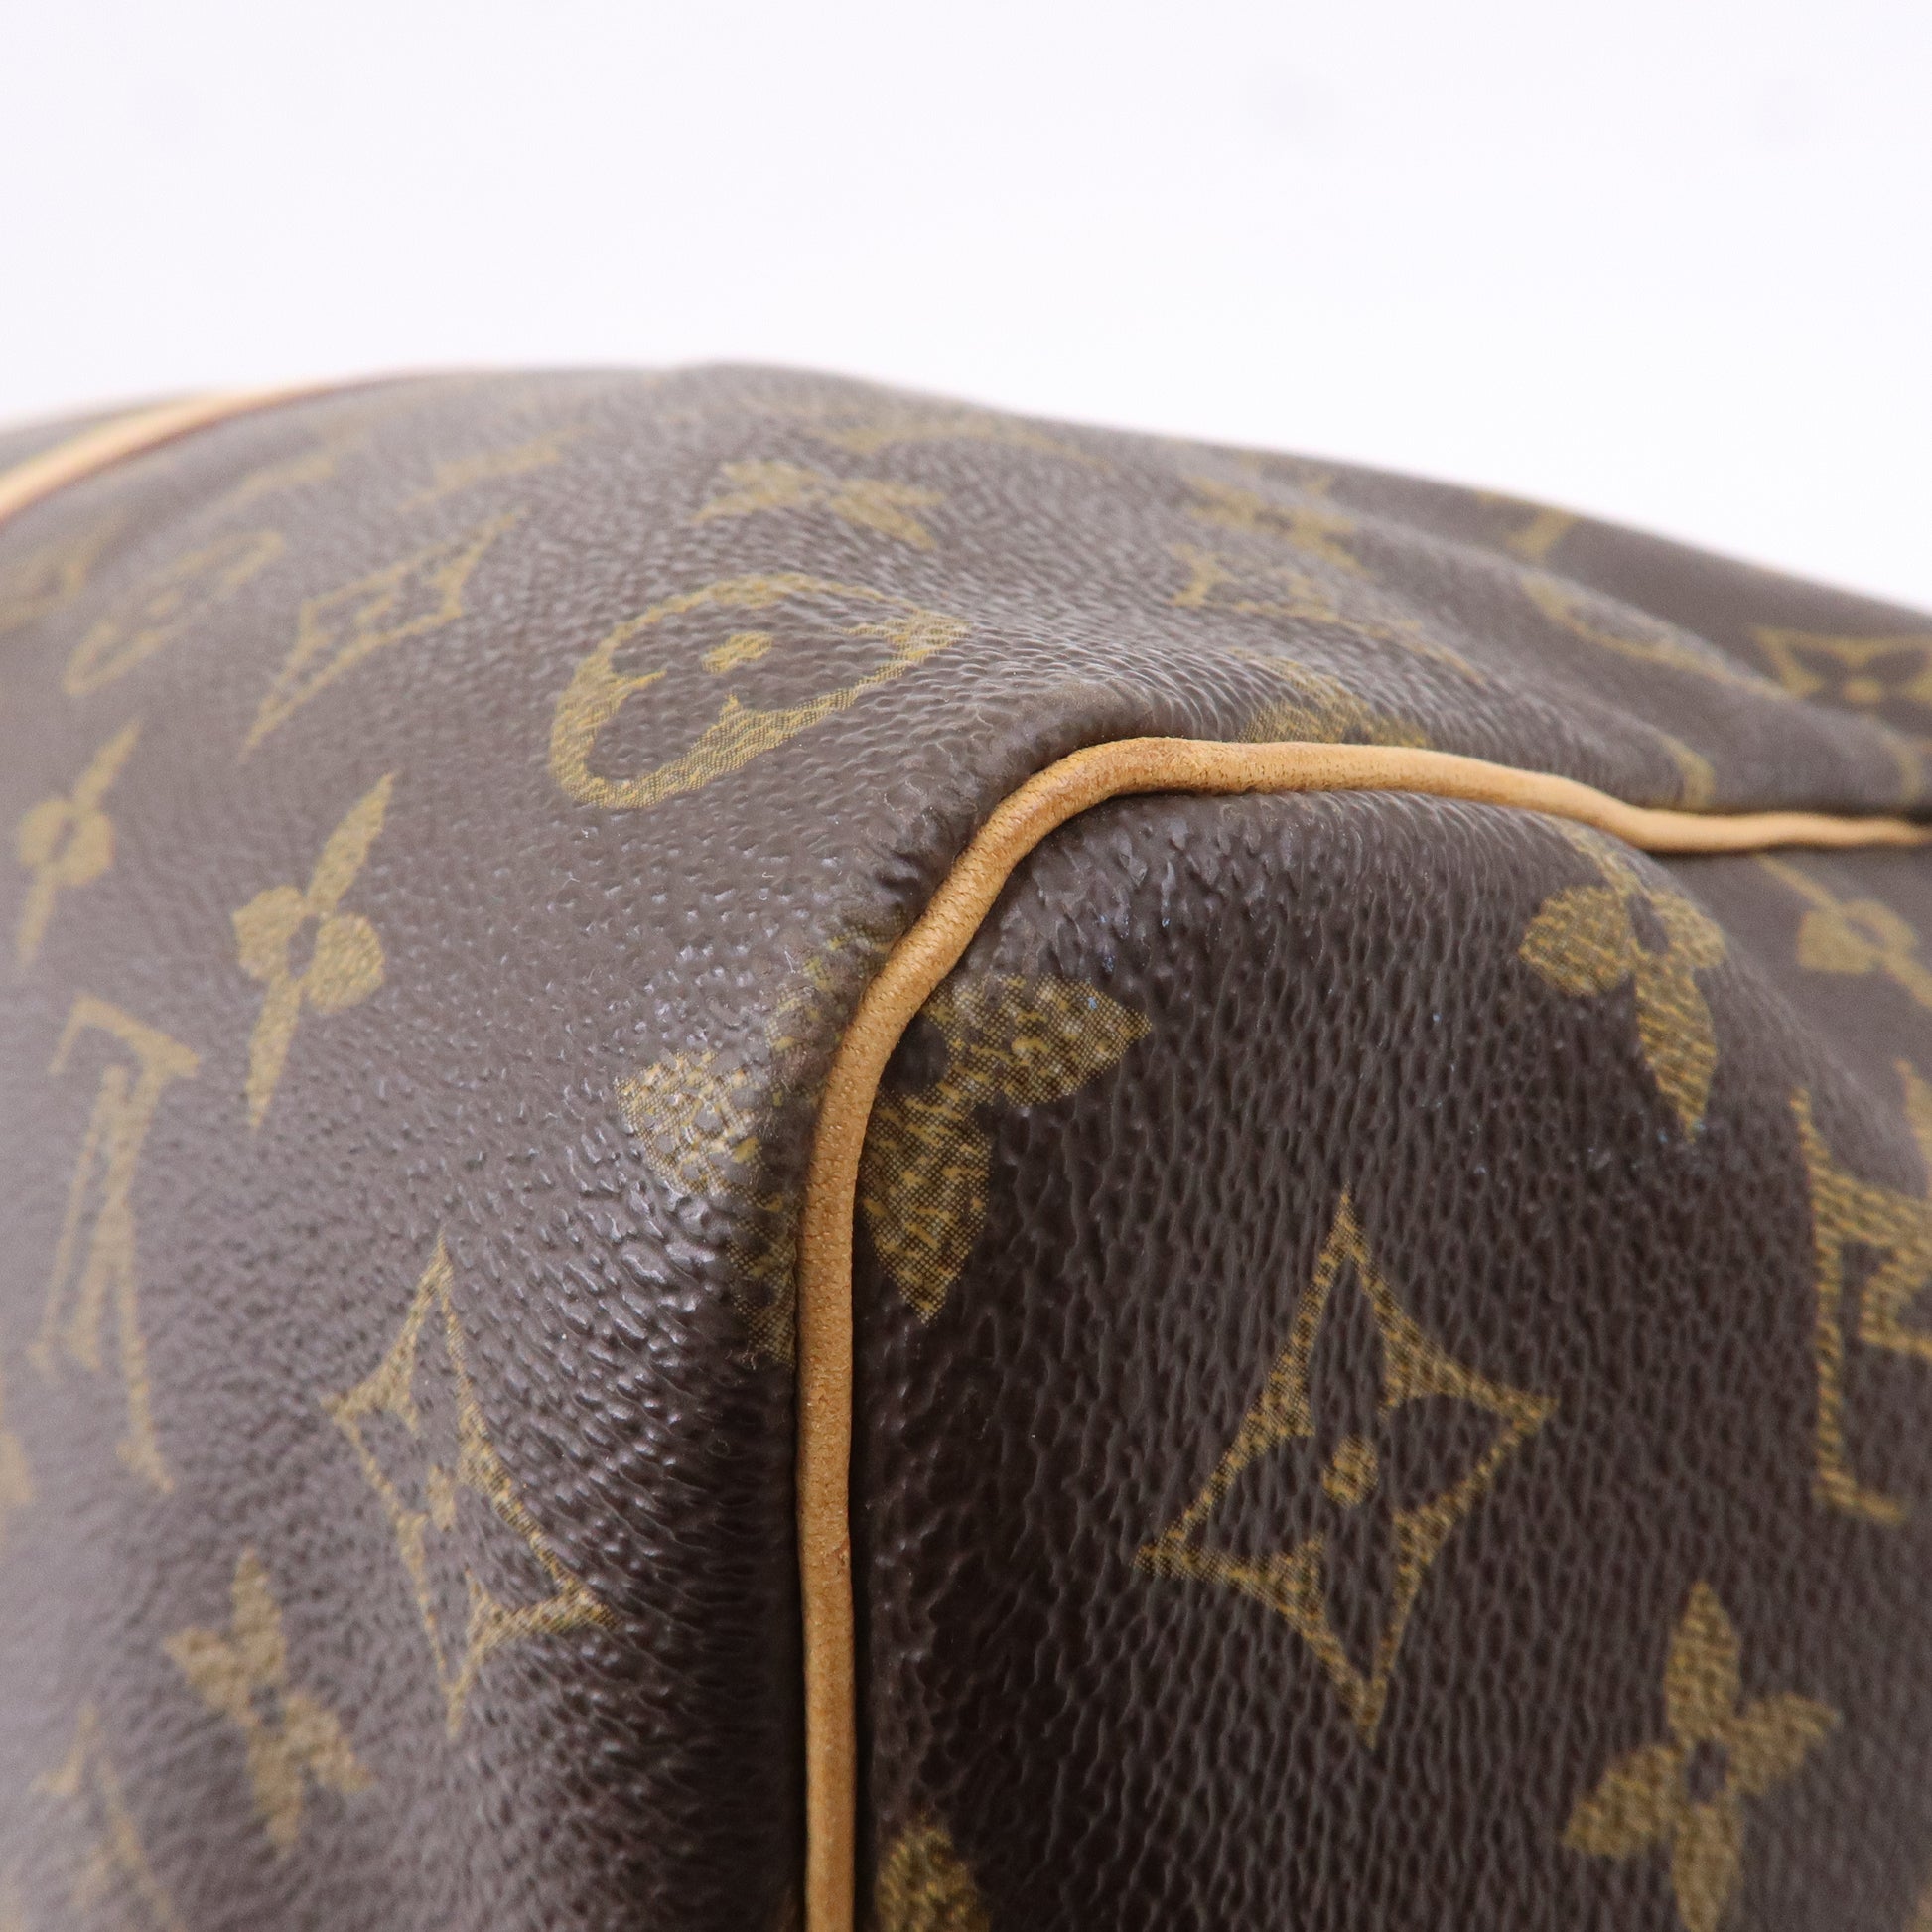 LOUIS VUITTON Louis Vuitton Monogram Keepall Bandouliere 50 Brown M41416  Women's Canvas Boston Bag